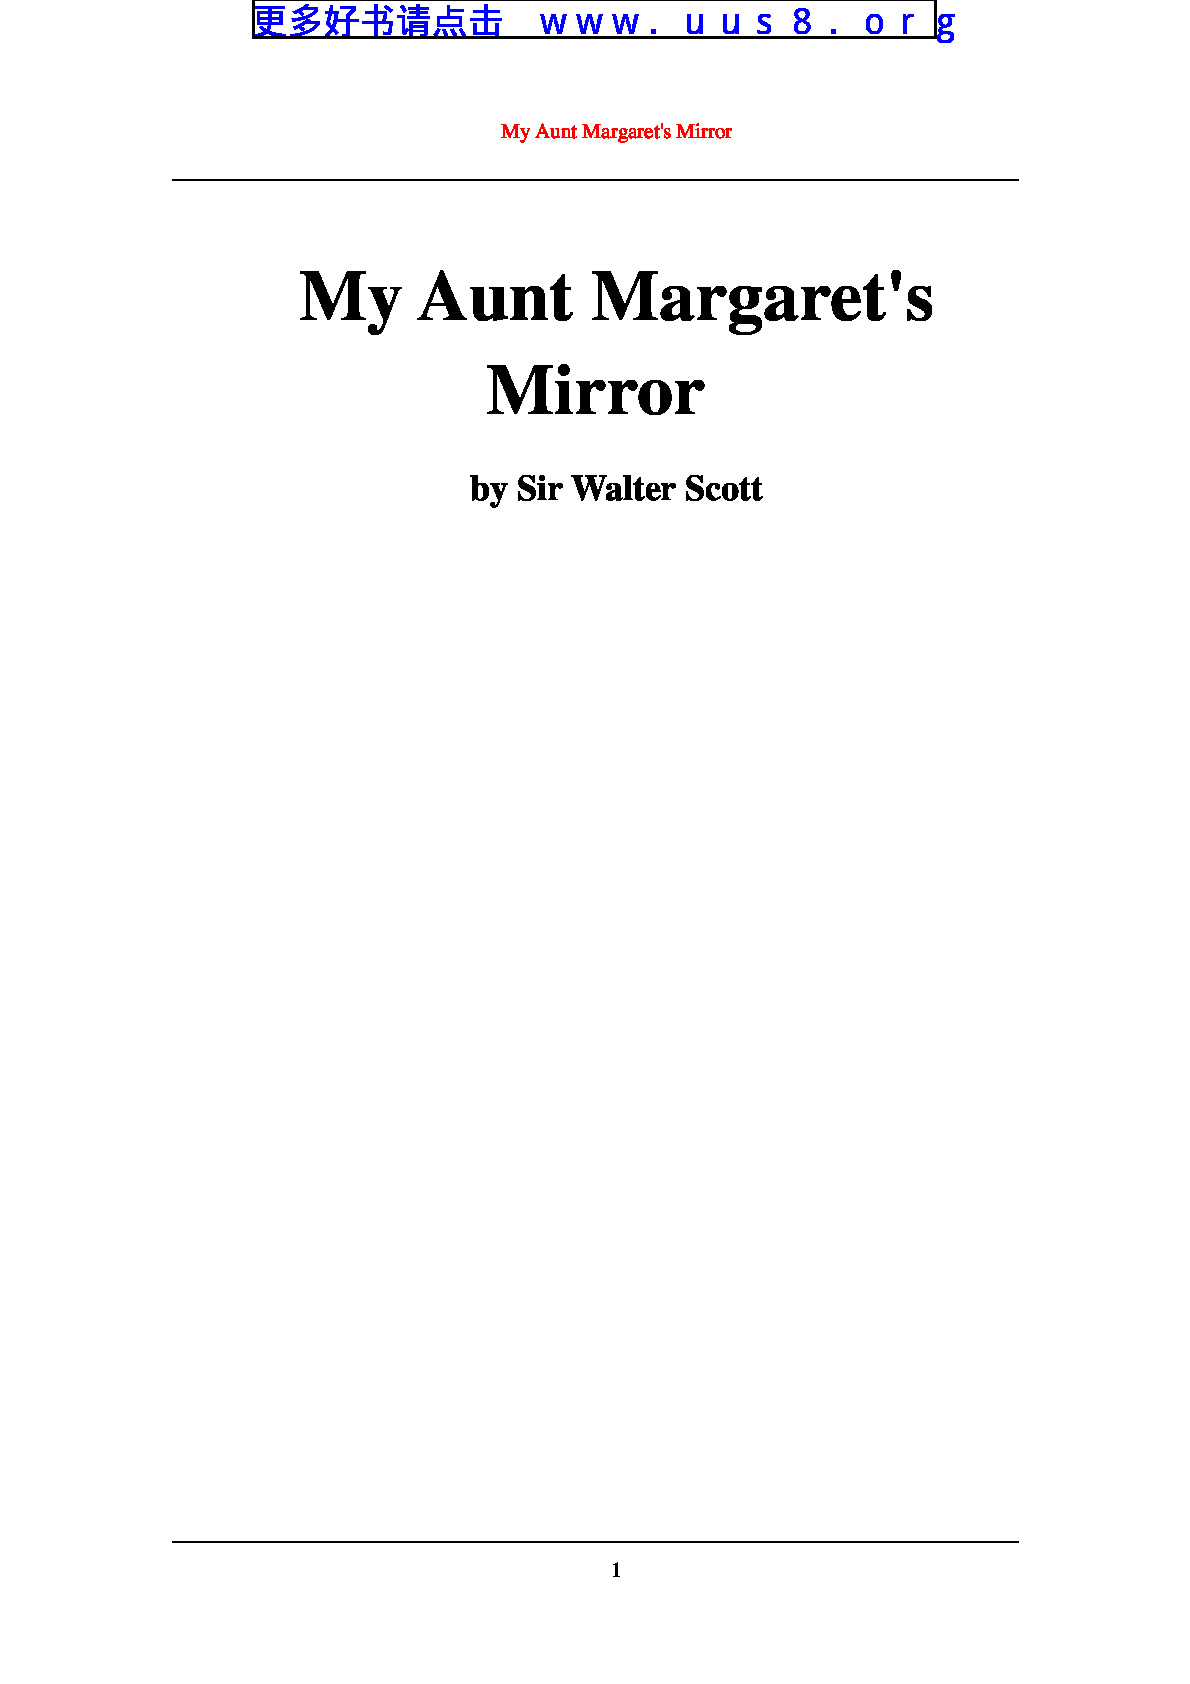 My_Aunt_Margaret’s_Mirror(玛格丽特阿姨的镜子)